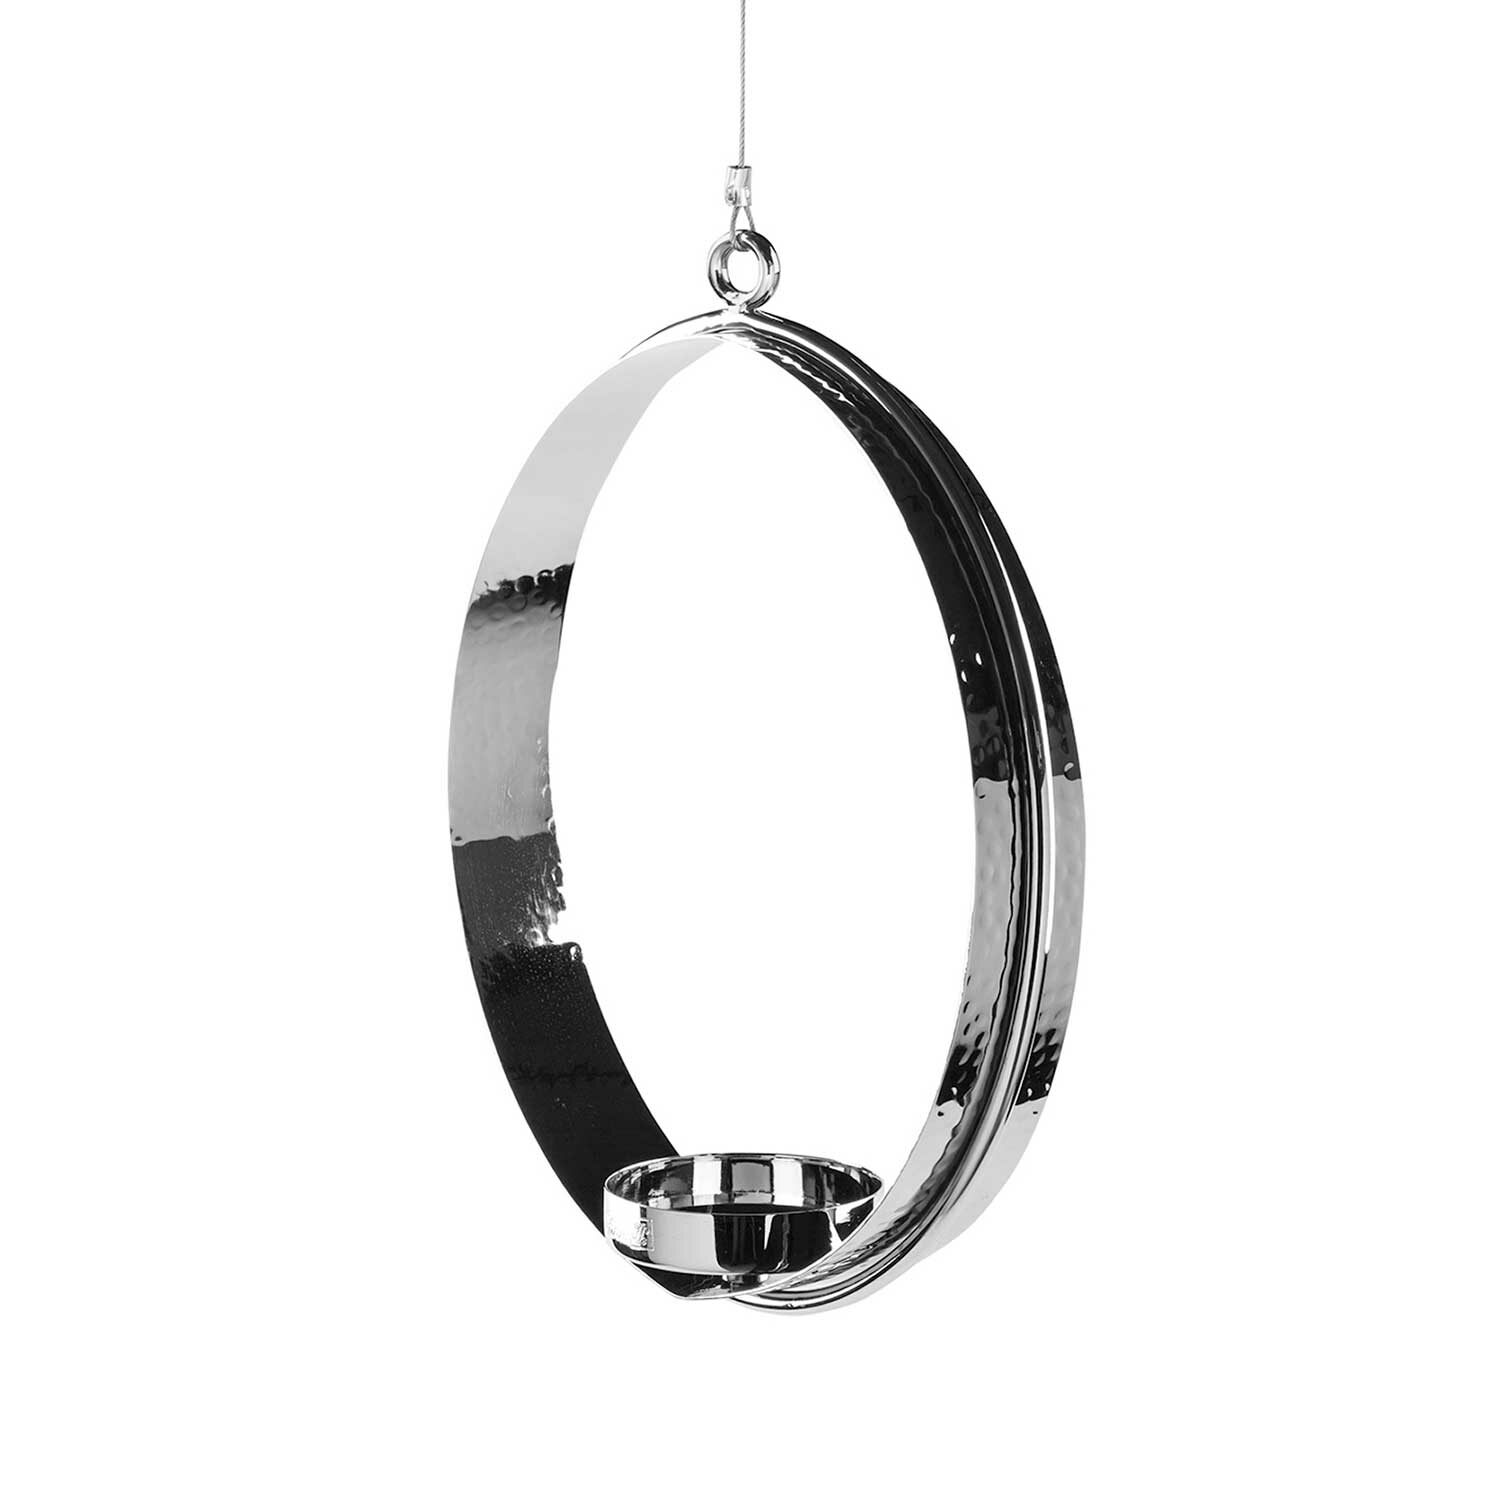 COLETTE maxi tealight holder for hanging